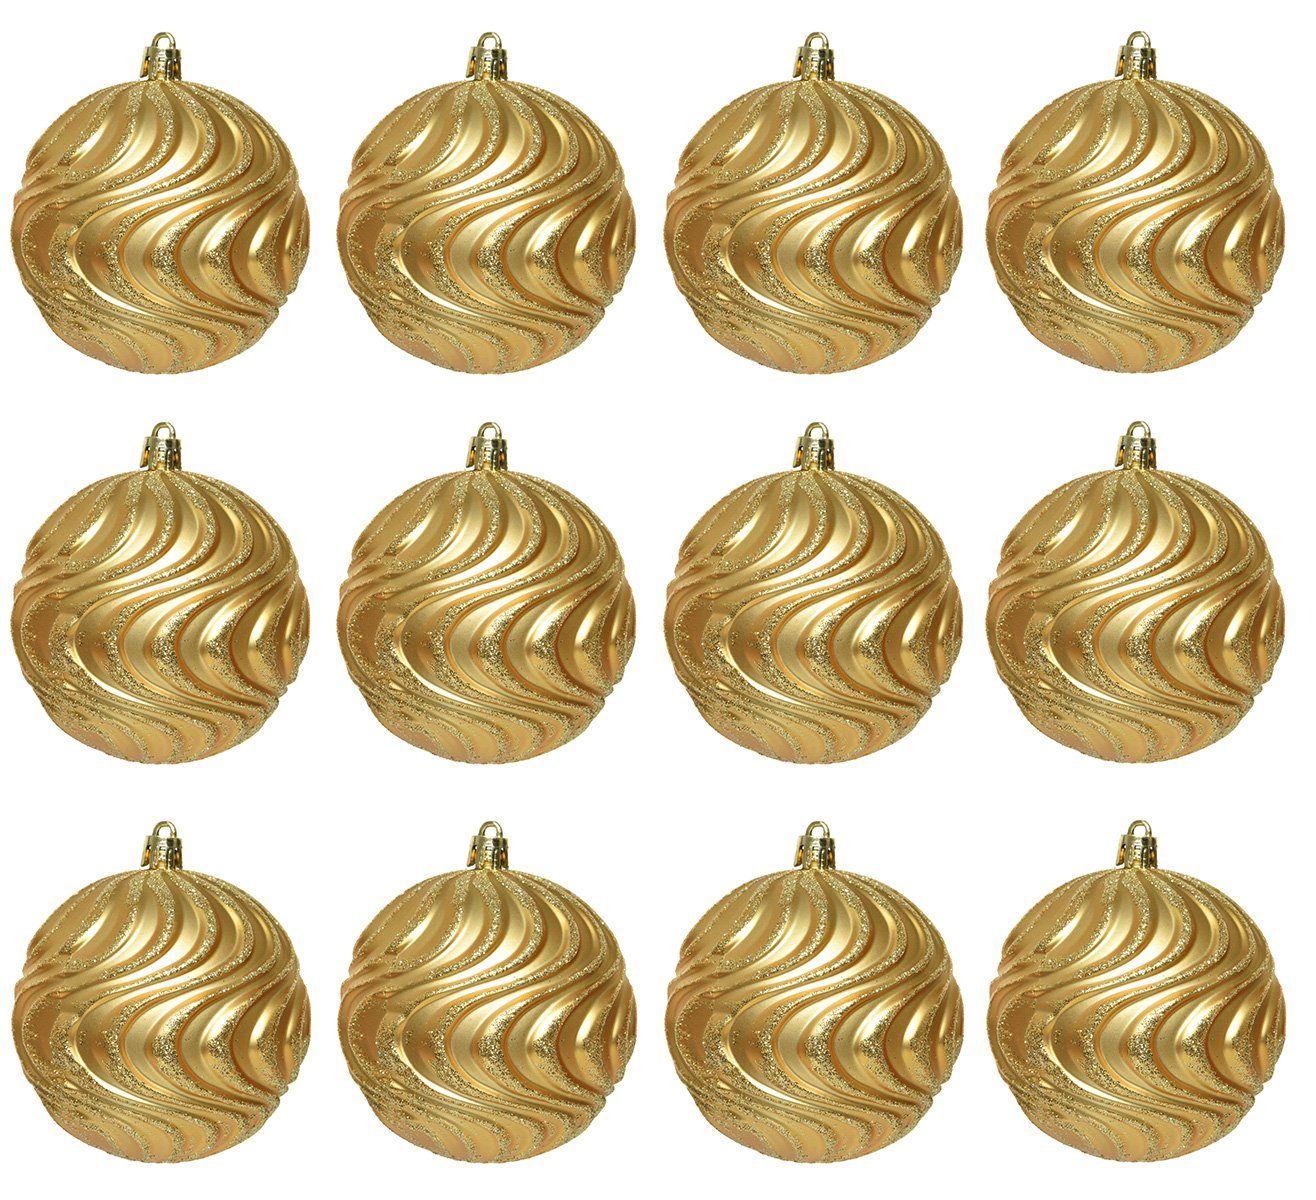 Decoris season decorations Christbaumschmuck, Weihnachtskugeln Hellgold - Kunststoff 12er Set Wellen 8cm Ornamente